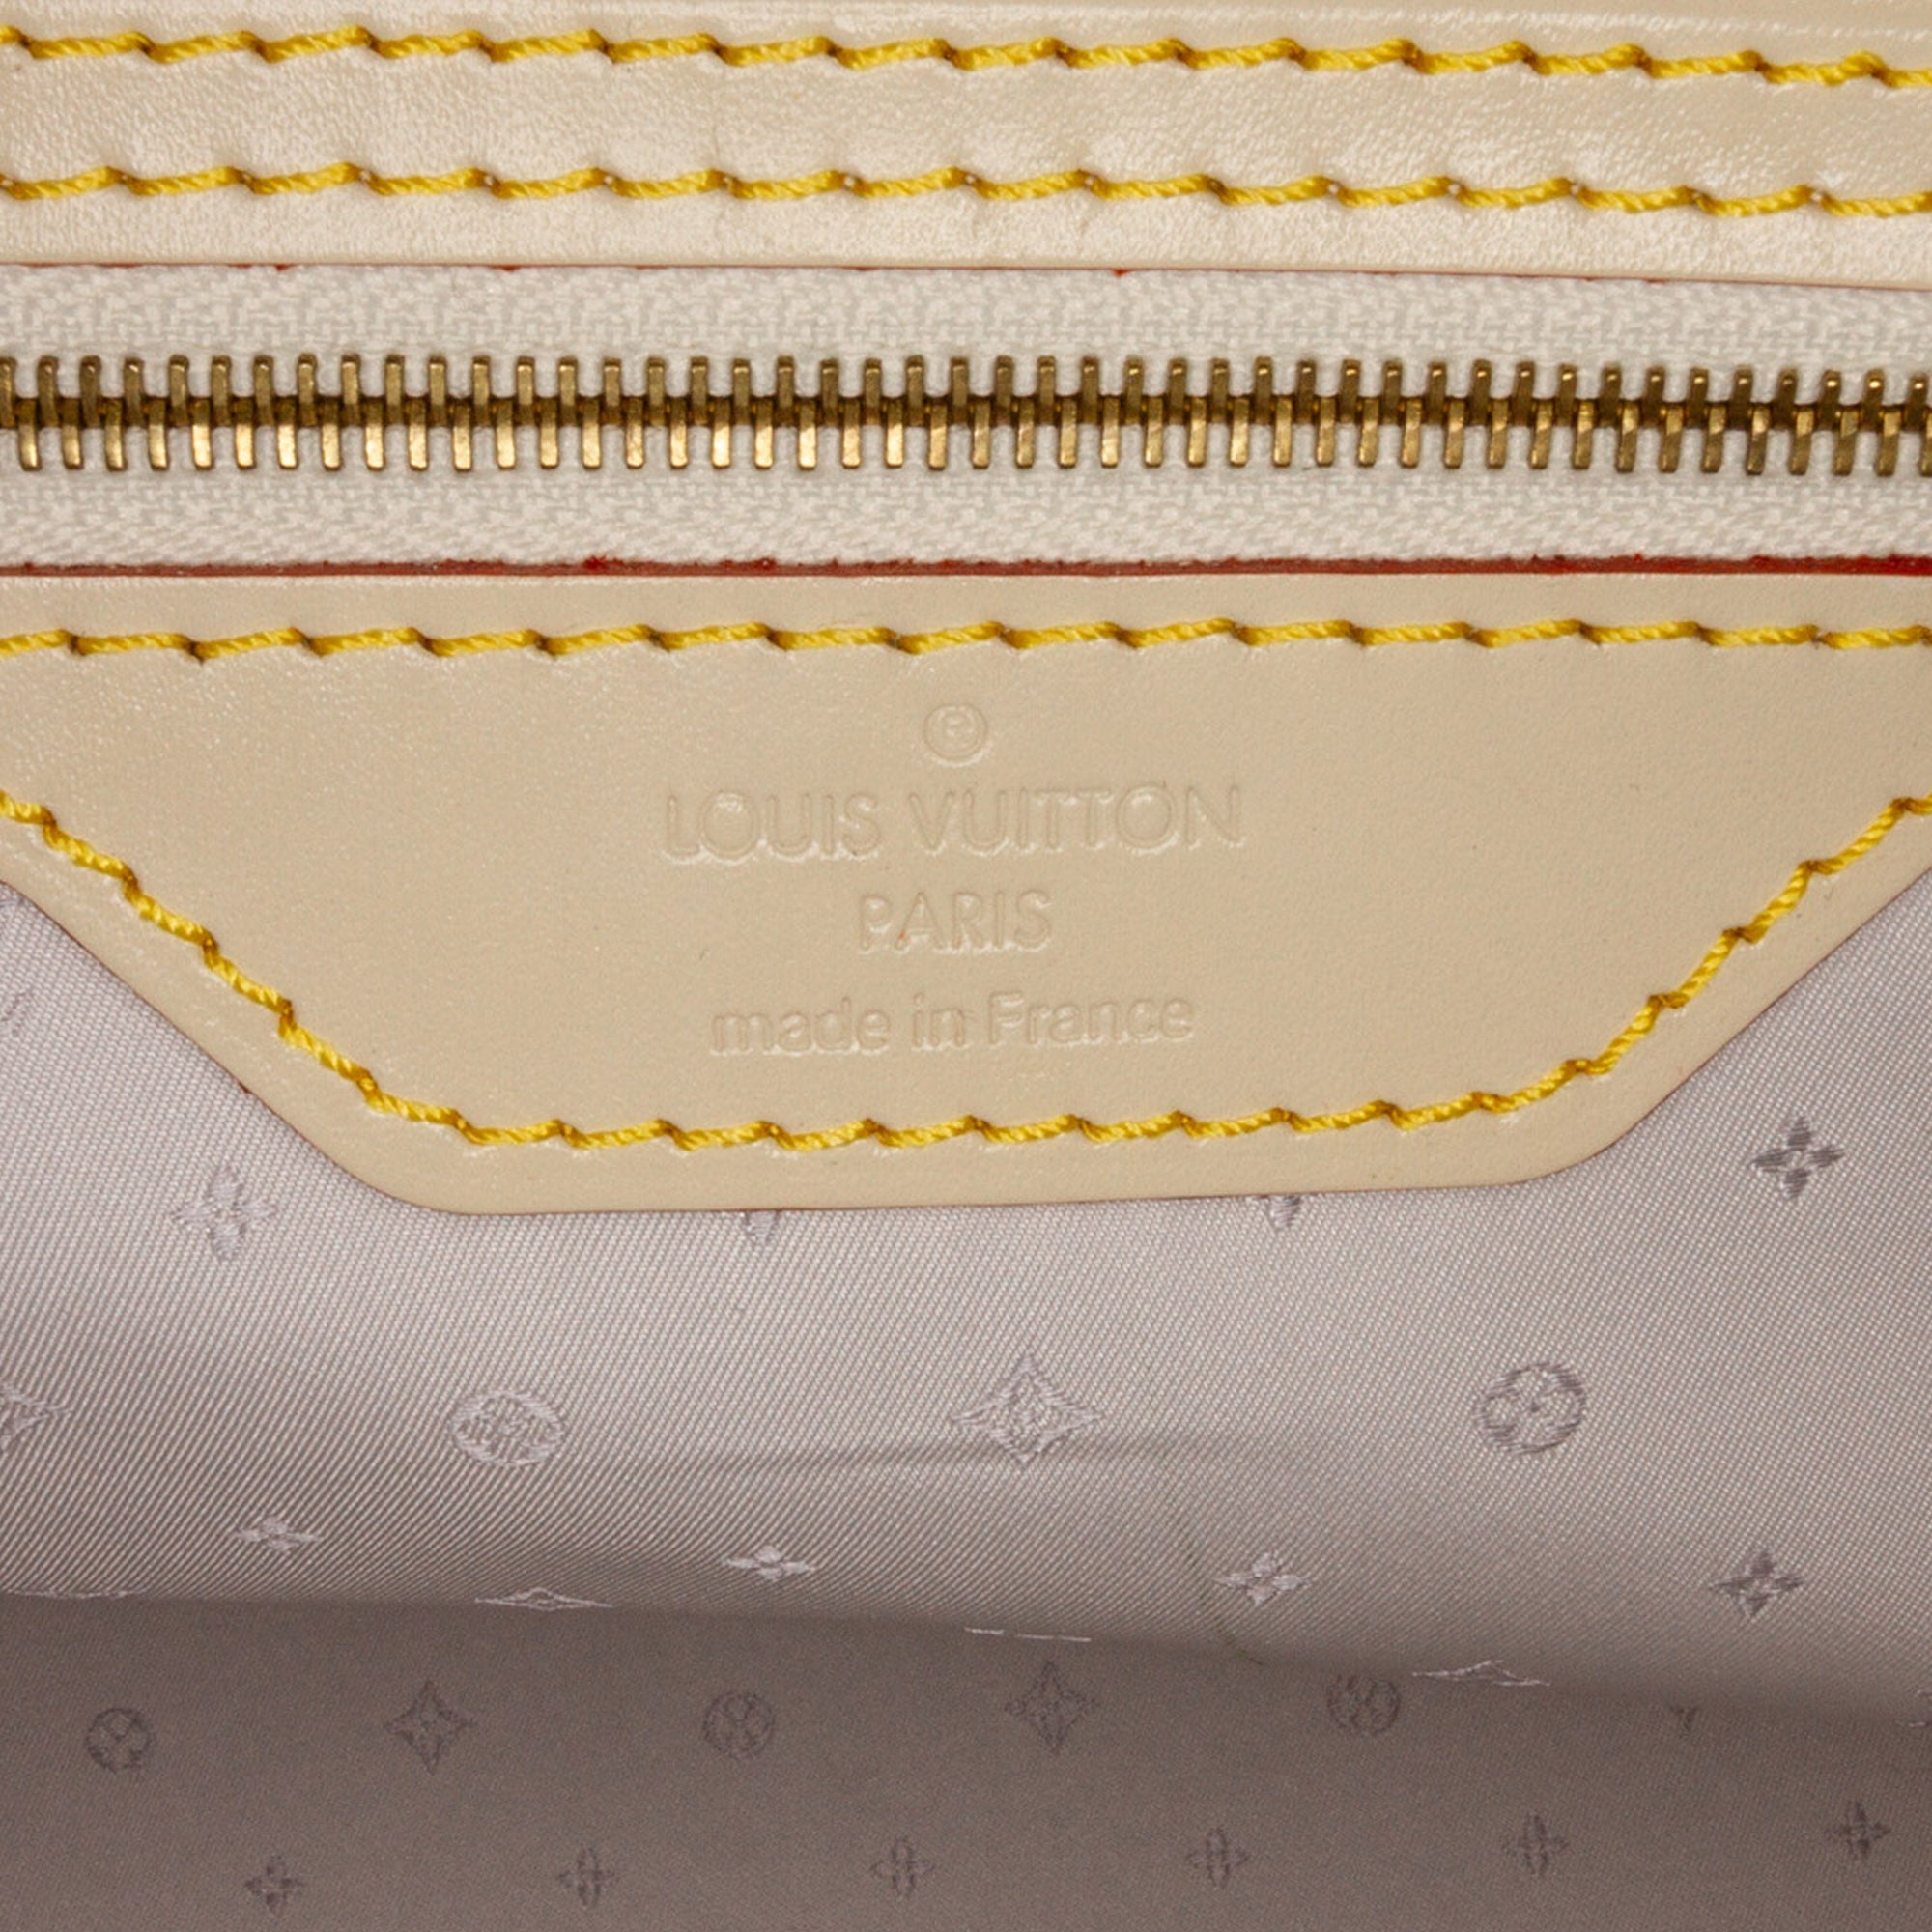 Louis Vuitton Suhali Cream/White & red border international wallet